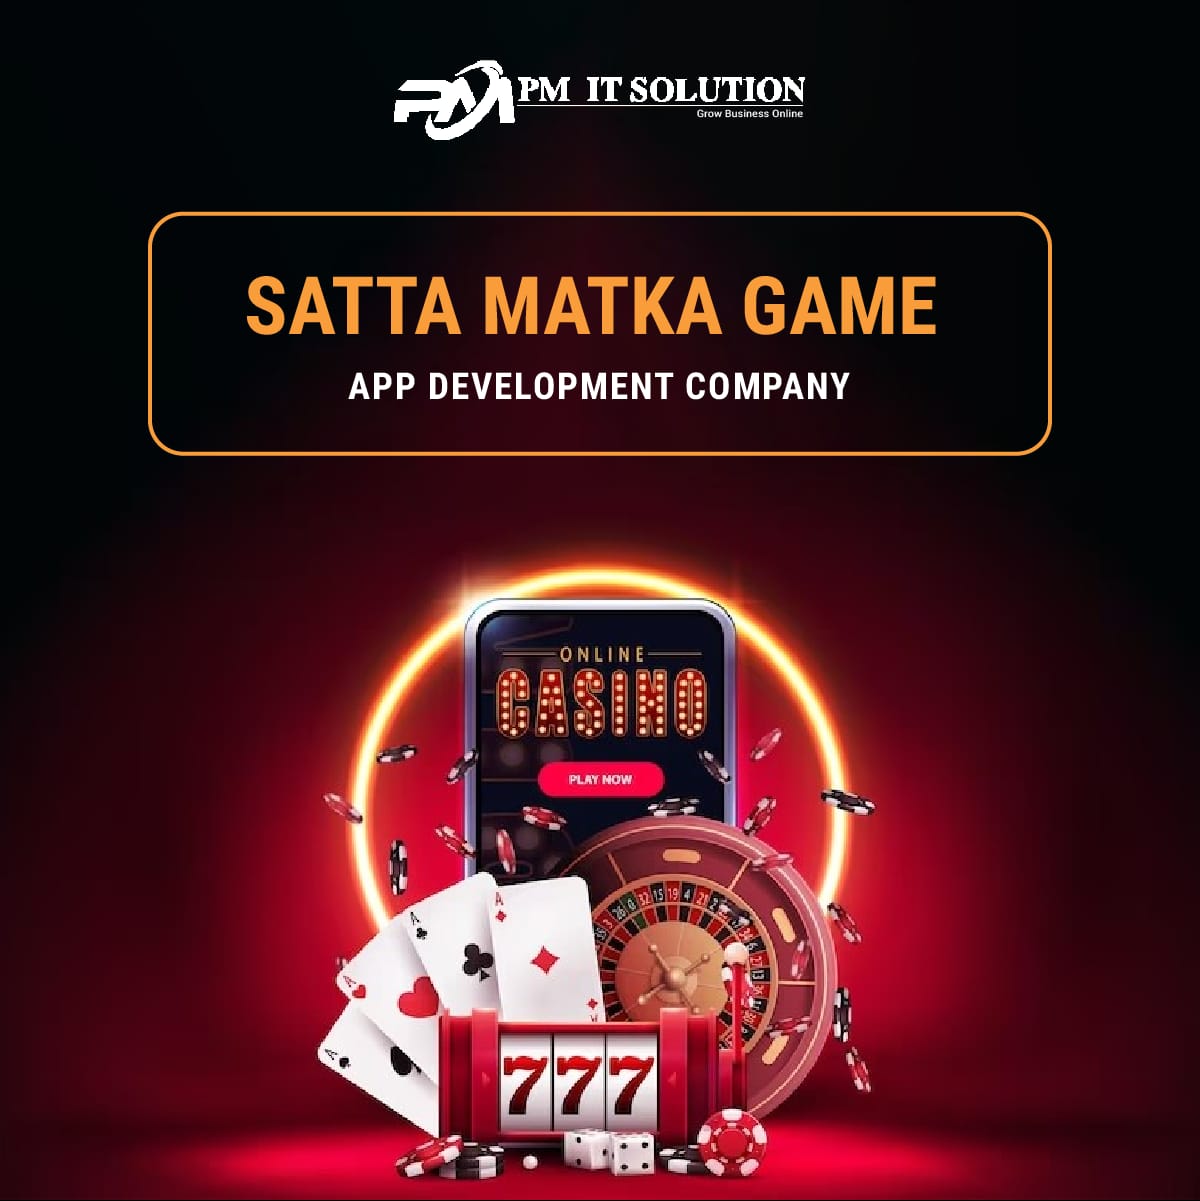 Satta Matka Game Development Company: Creating the Hottest New Games